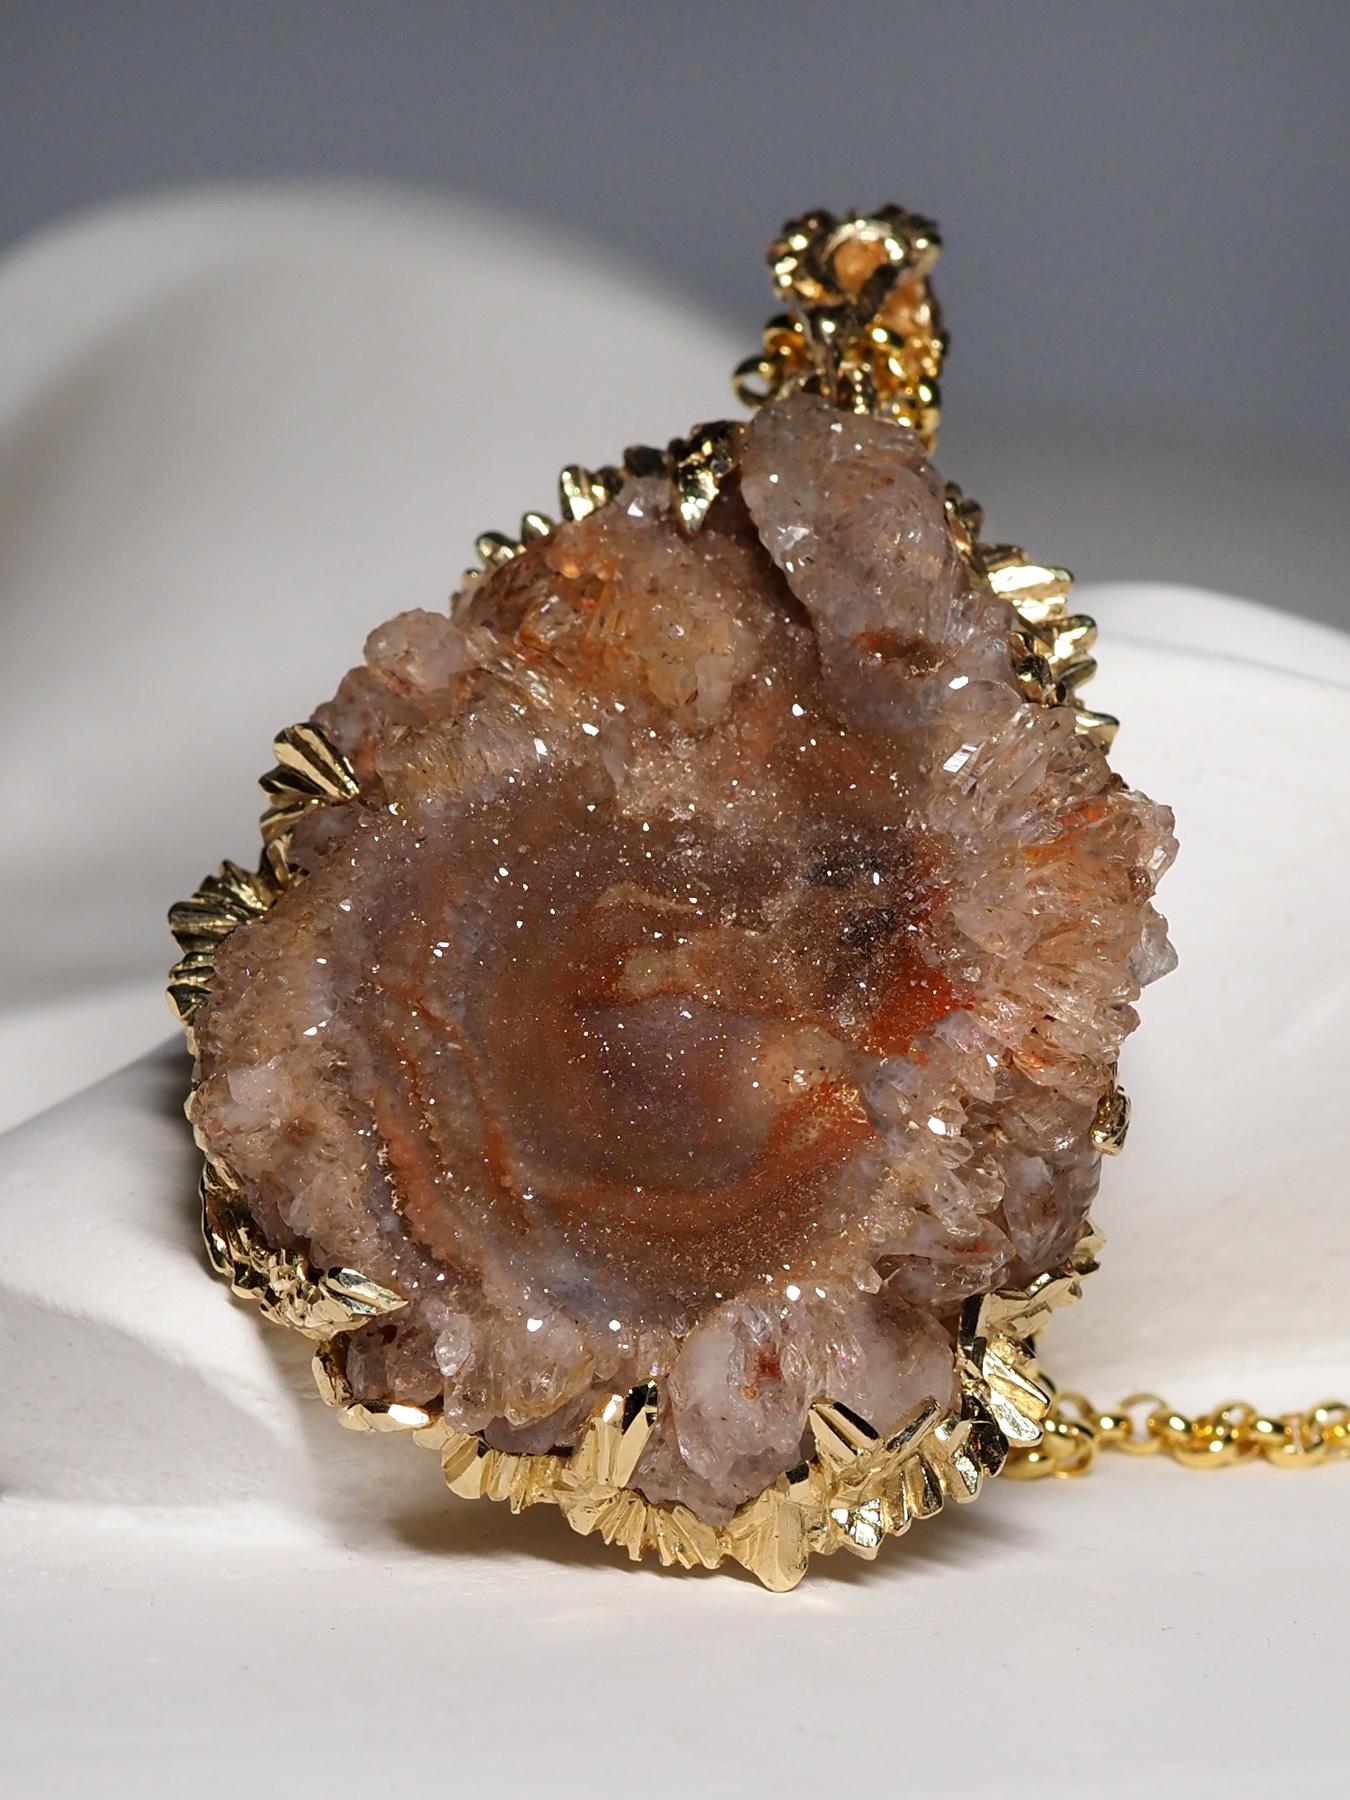 Natural Agate Rose Nugget pendant with quartz crystals in 14K yellow gold
gemstone origin - Brazil
agate measurements - 0.59 x 1.34 x 1.73 in / 15 х 34 х 44 mm
agate weight - 97.27 carat
pendant lenght - 2.32 in / 59 mm
pendant weight - 36.67